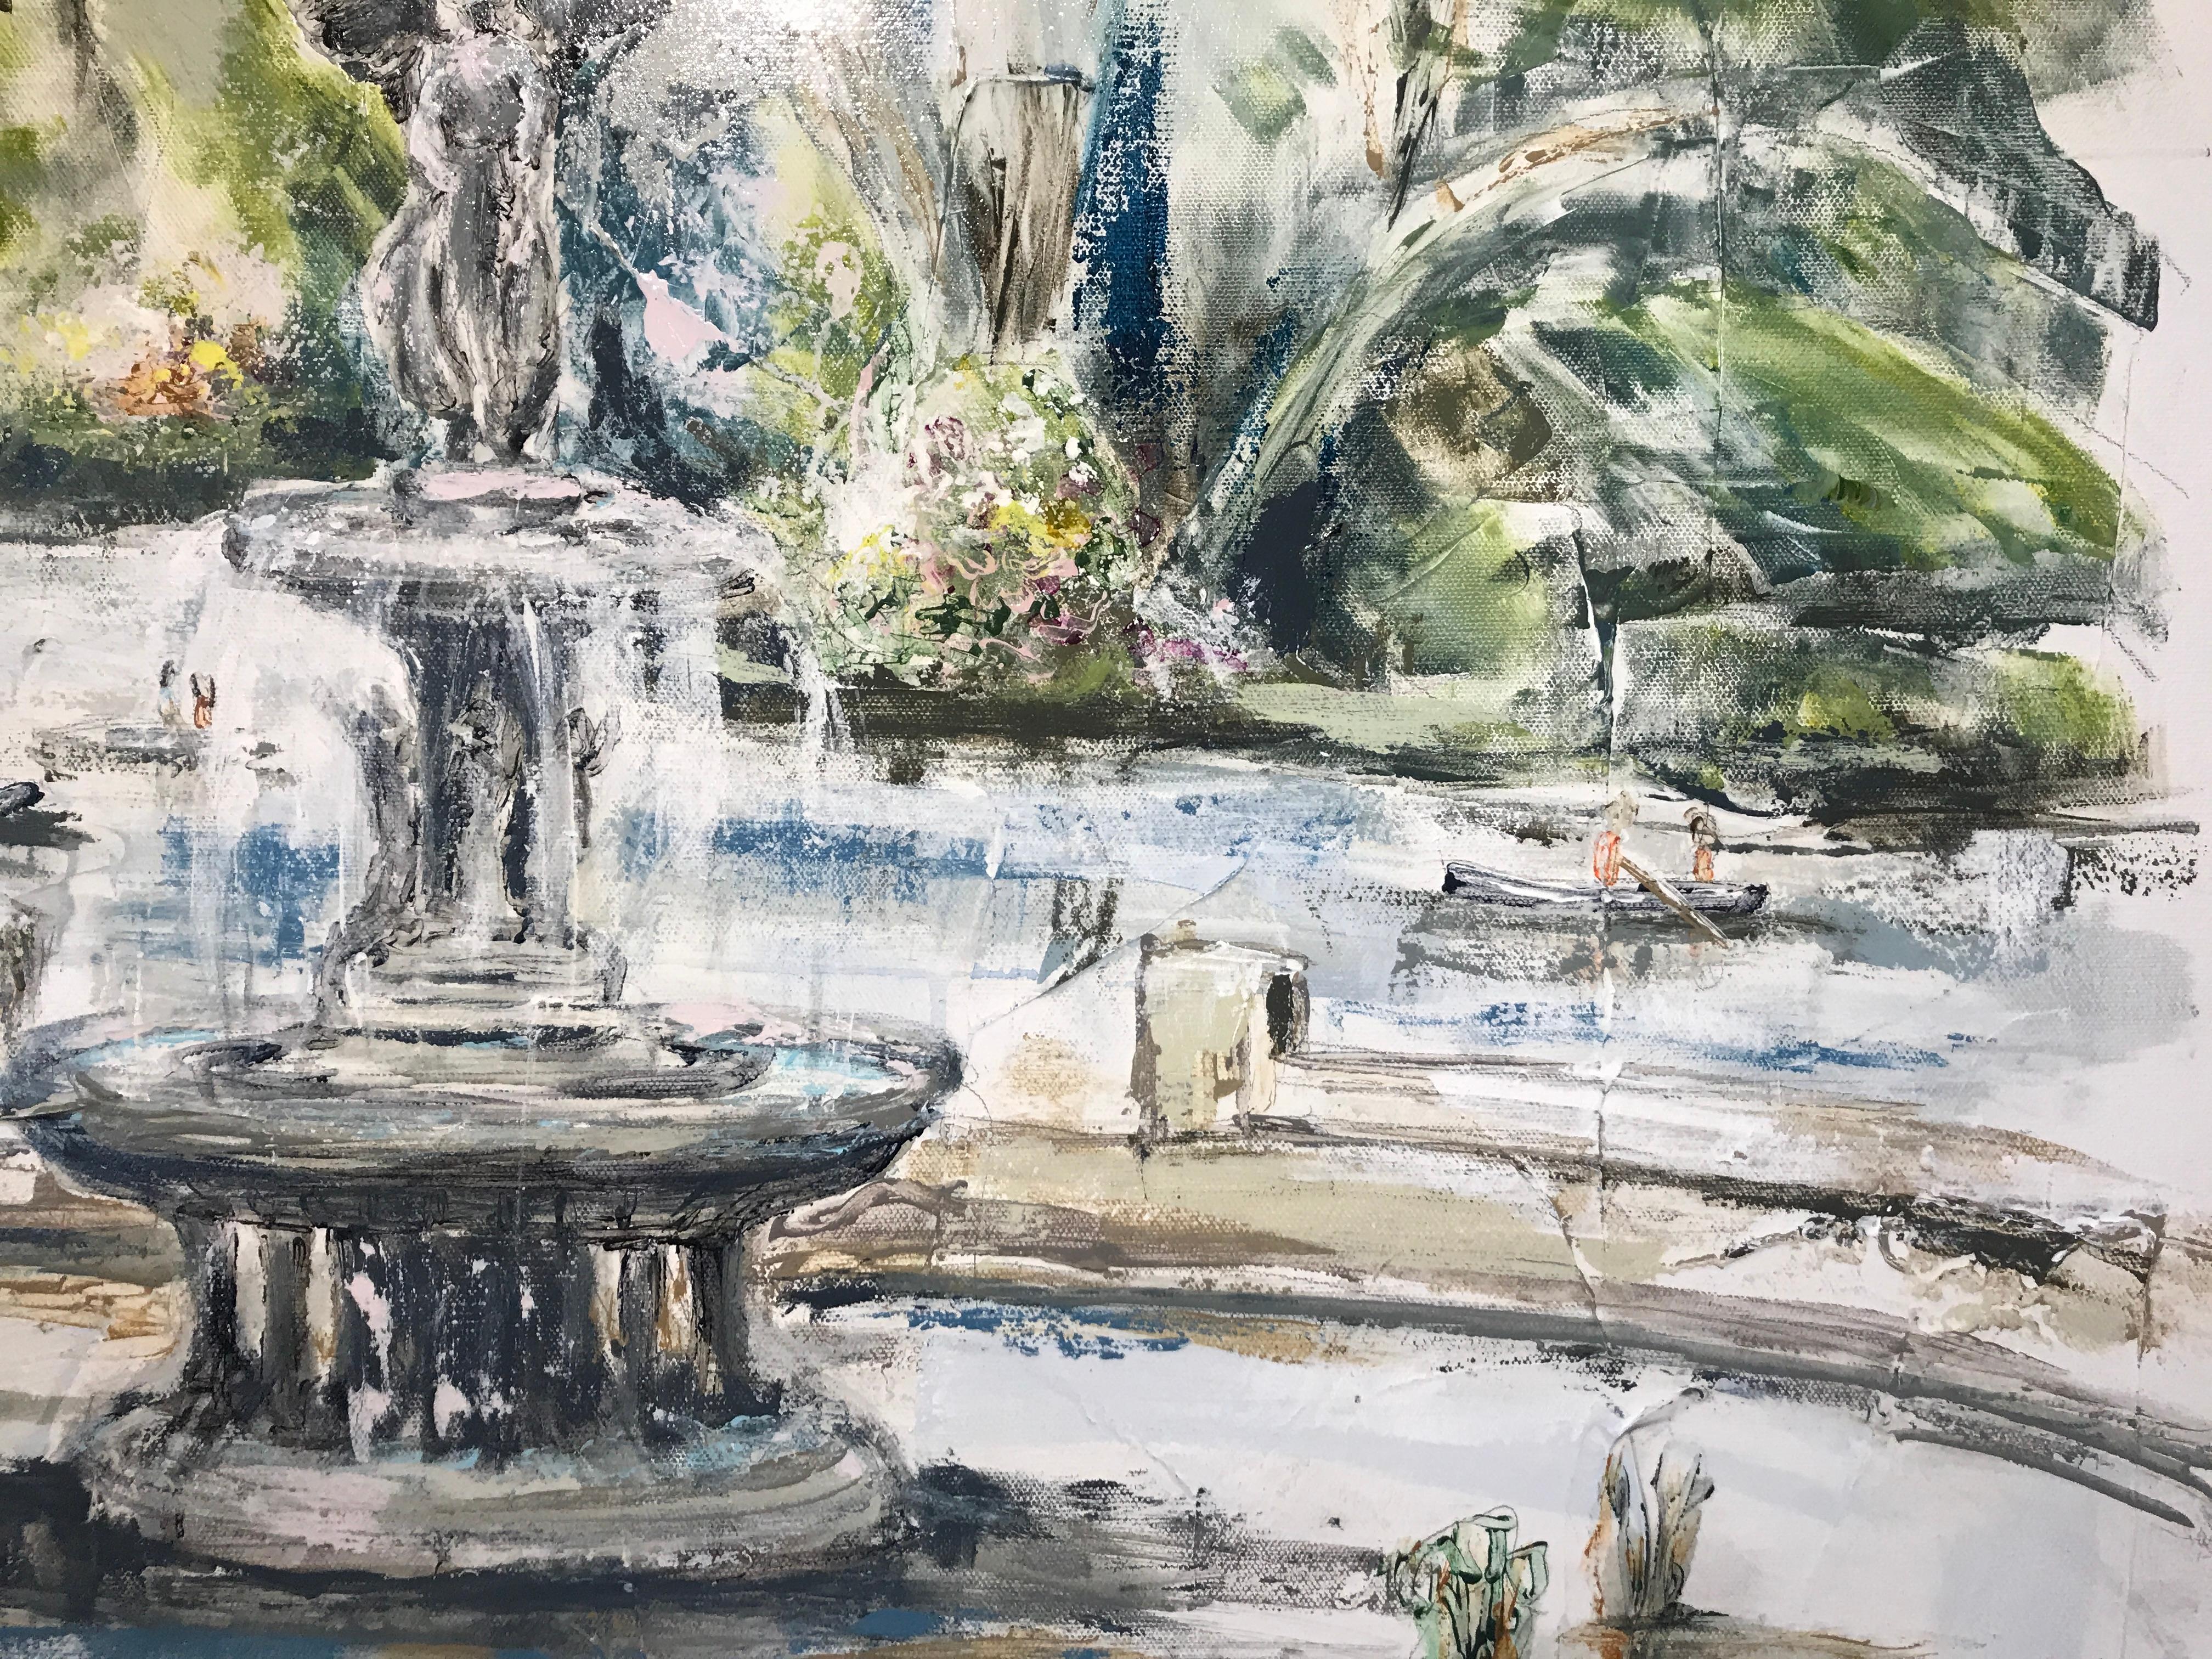 Bethesda Fountain/Central Park, Sarah Robertson Mixed Media on Canvas Painting 4